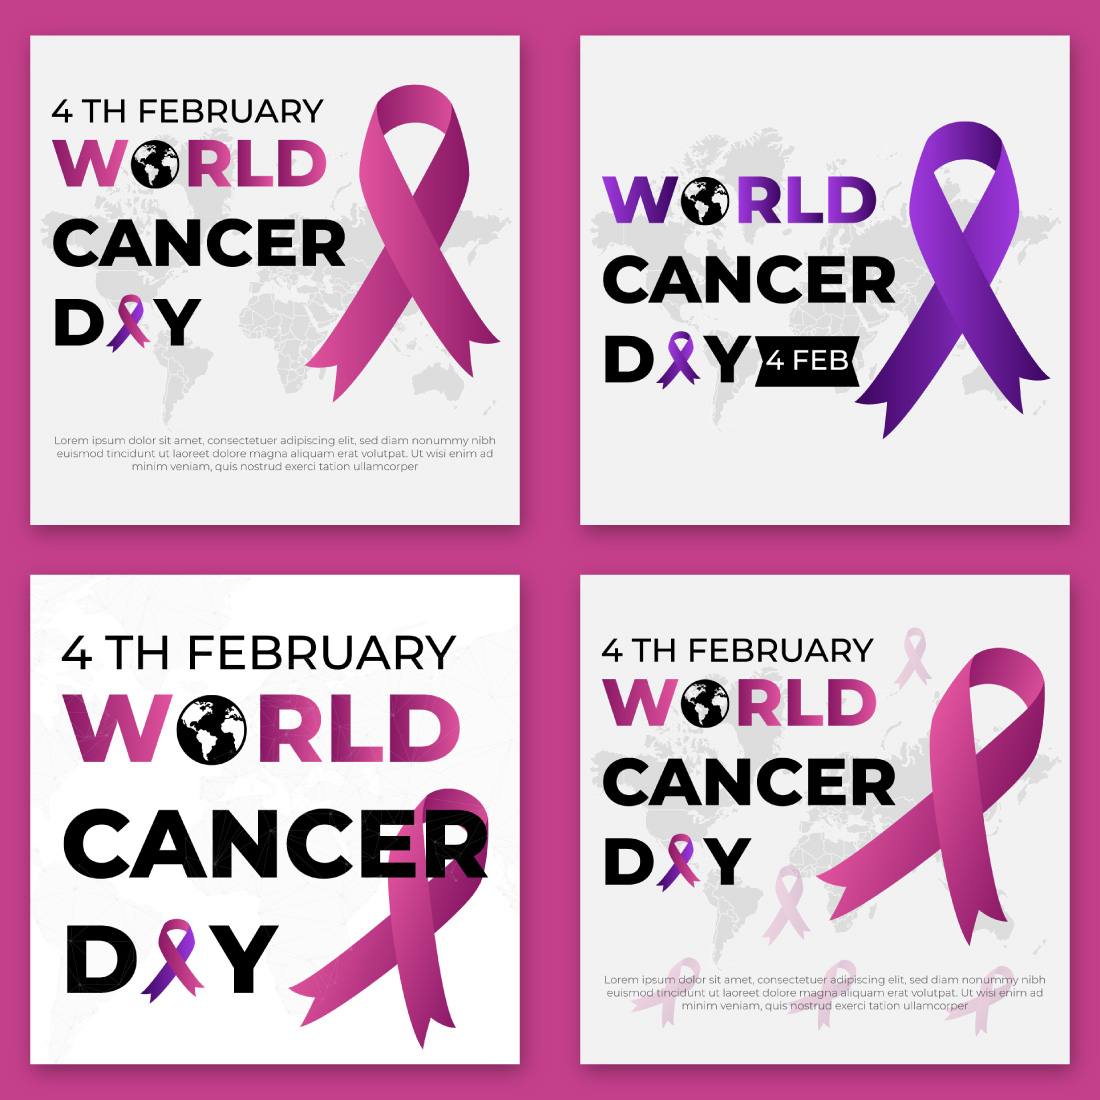 World Cancer Day Background Design cover image.